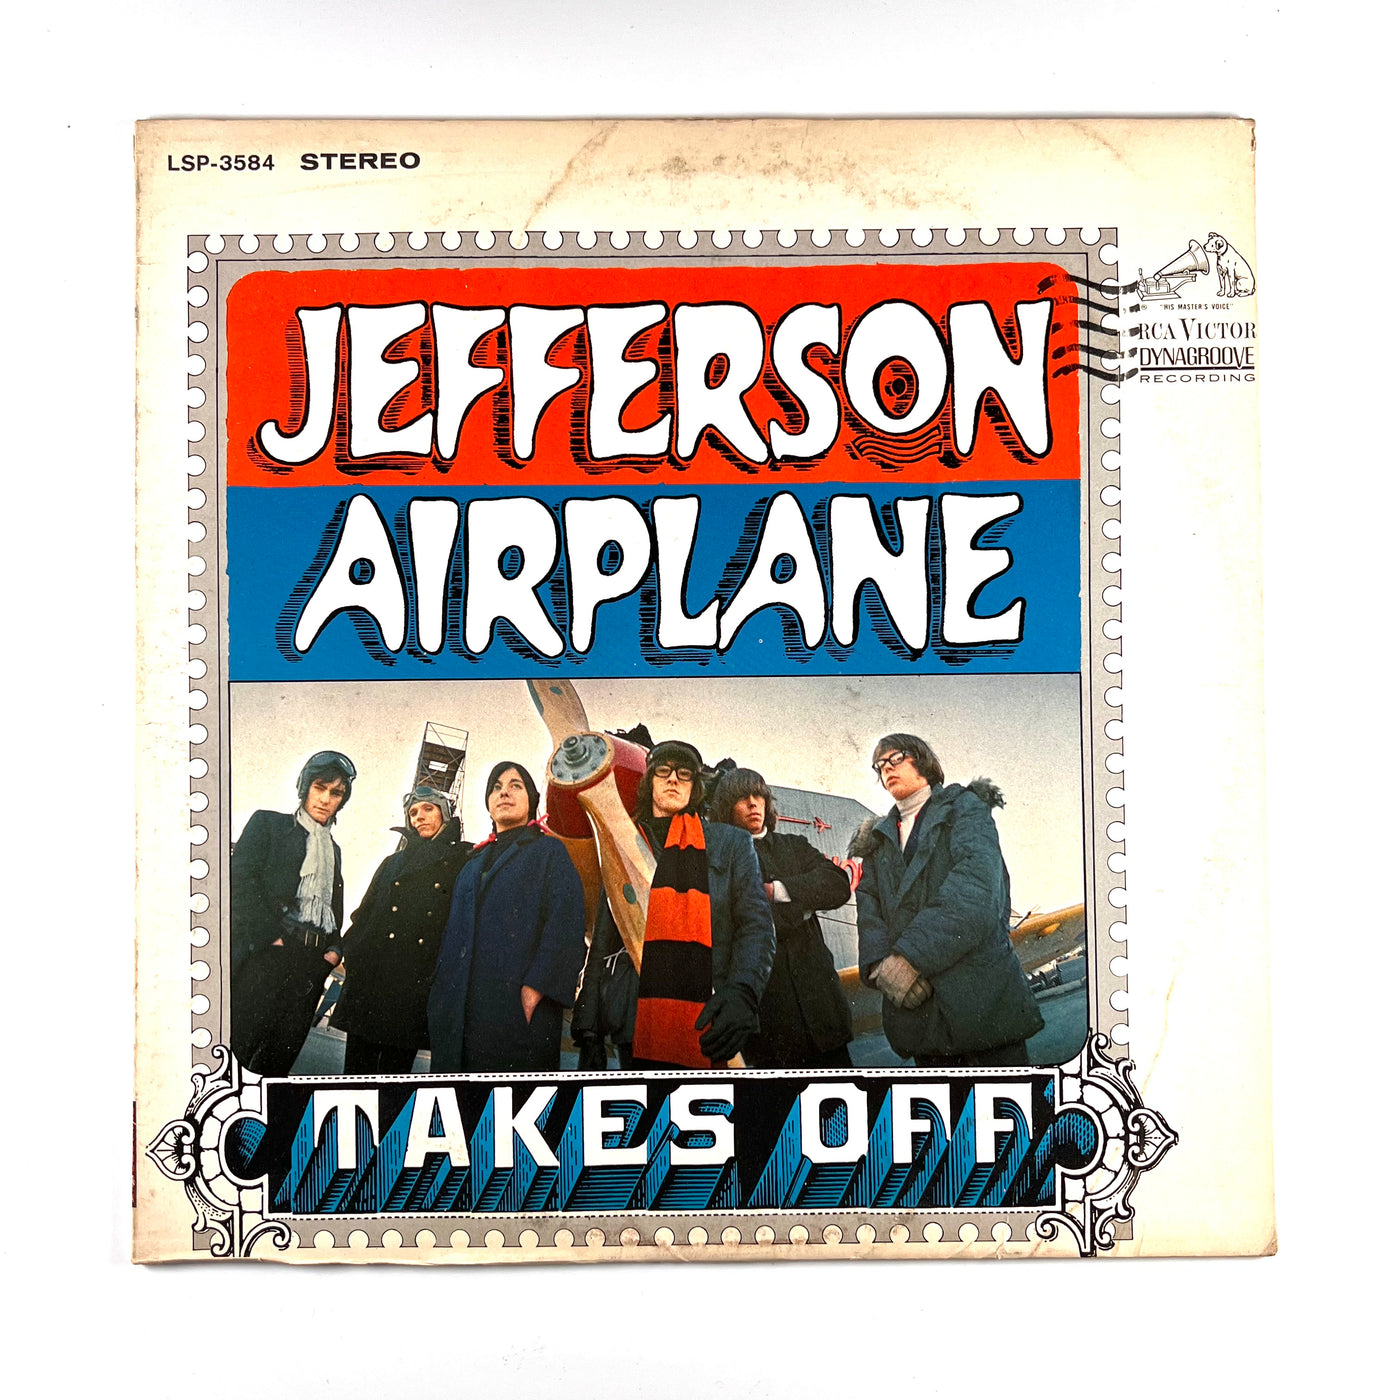 Jefferson Airplane - Jefferson Airplane Takes Off